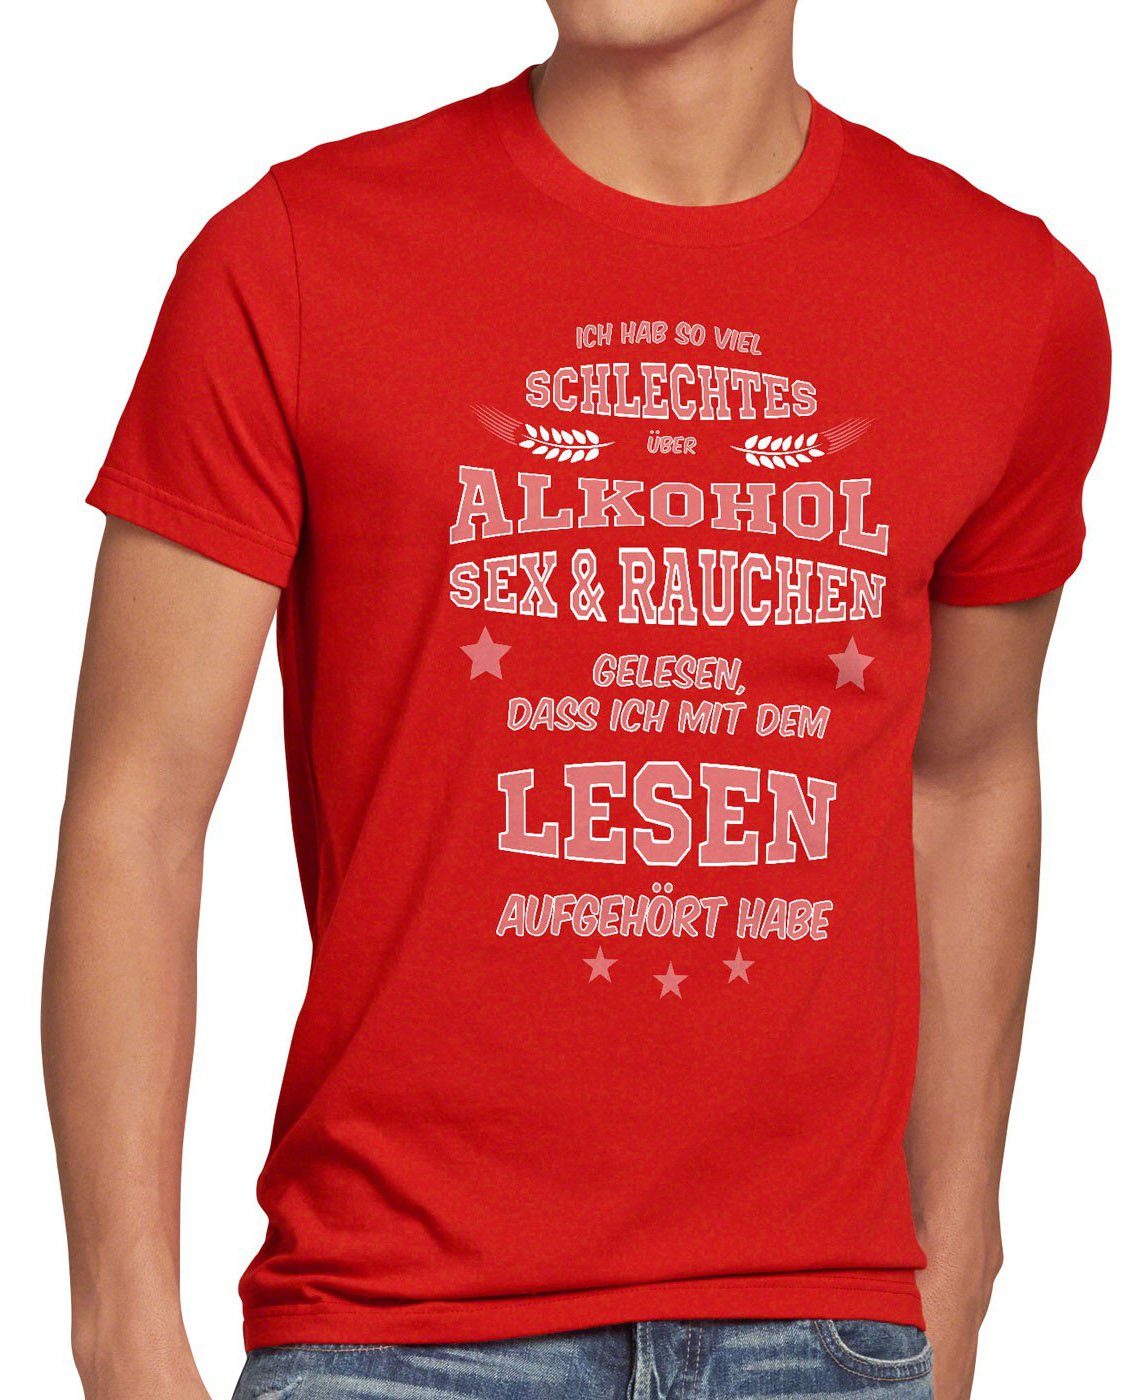 style3 Print-Shirt Herren T-Shirt Viel schlechtes Alkohol Sex Rauchen gelesen Spruch Fun Funshirt rot